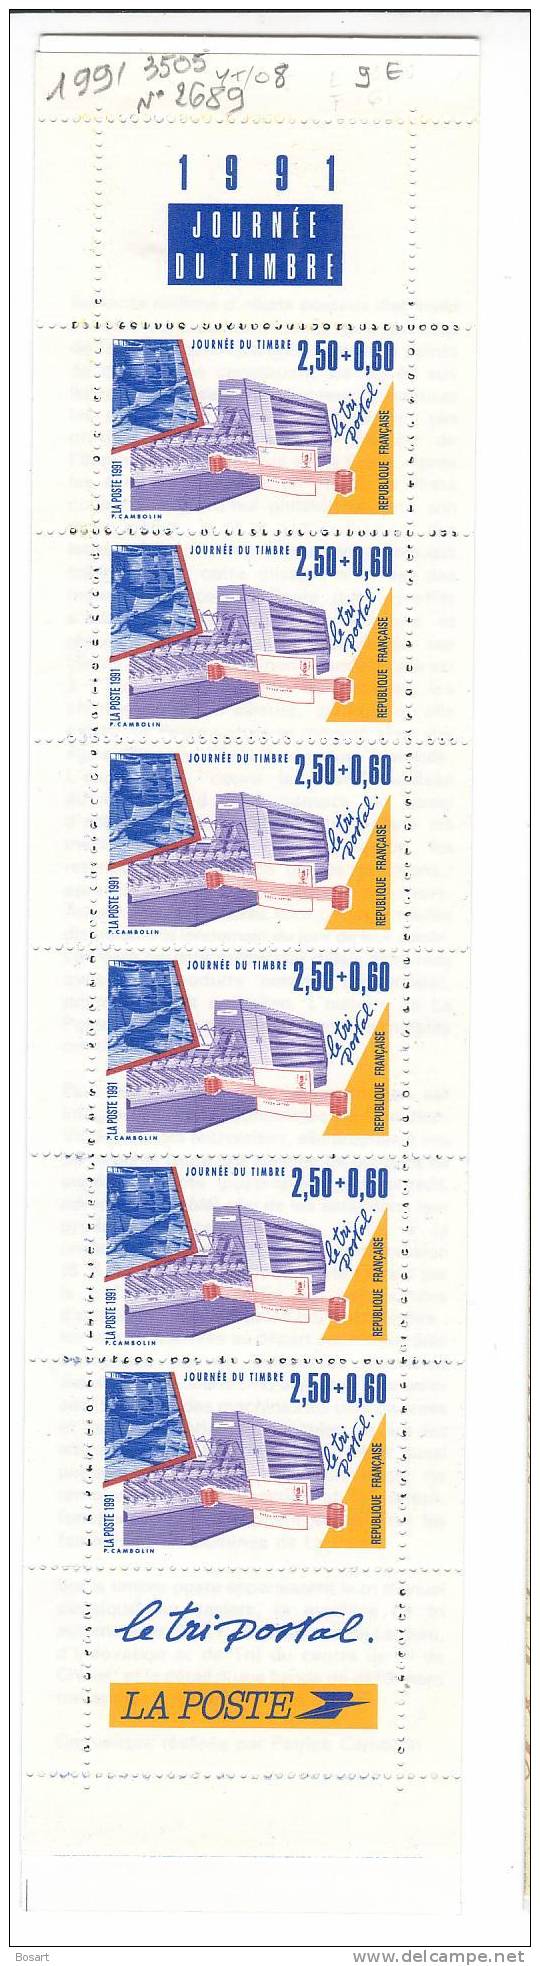 France Carnet Journée Du Timbre 1991 Neuf Y.T. 3505 Le Tri Postal 2689 - Stamp Day